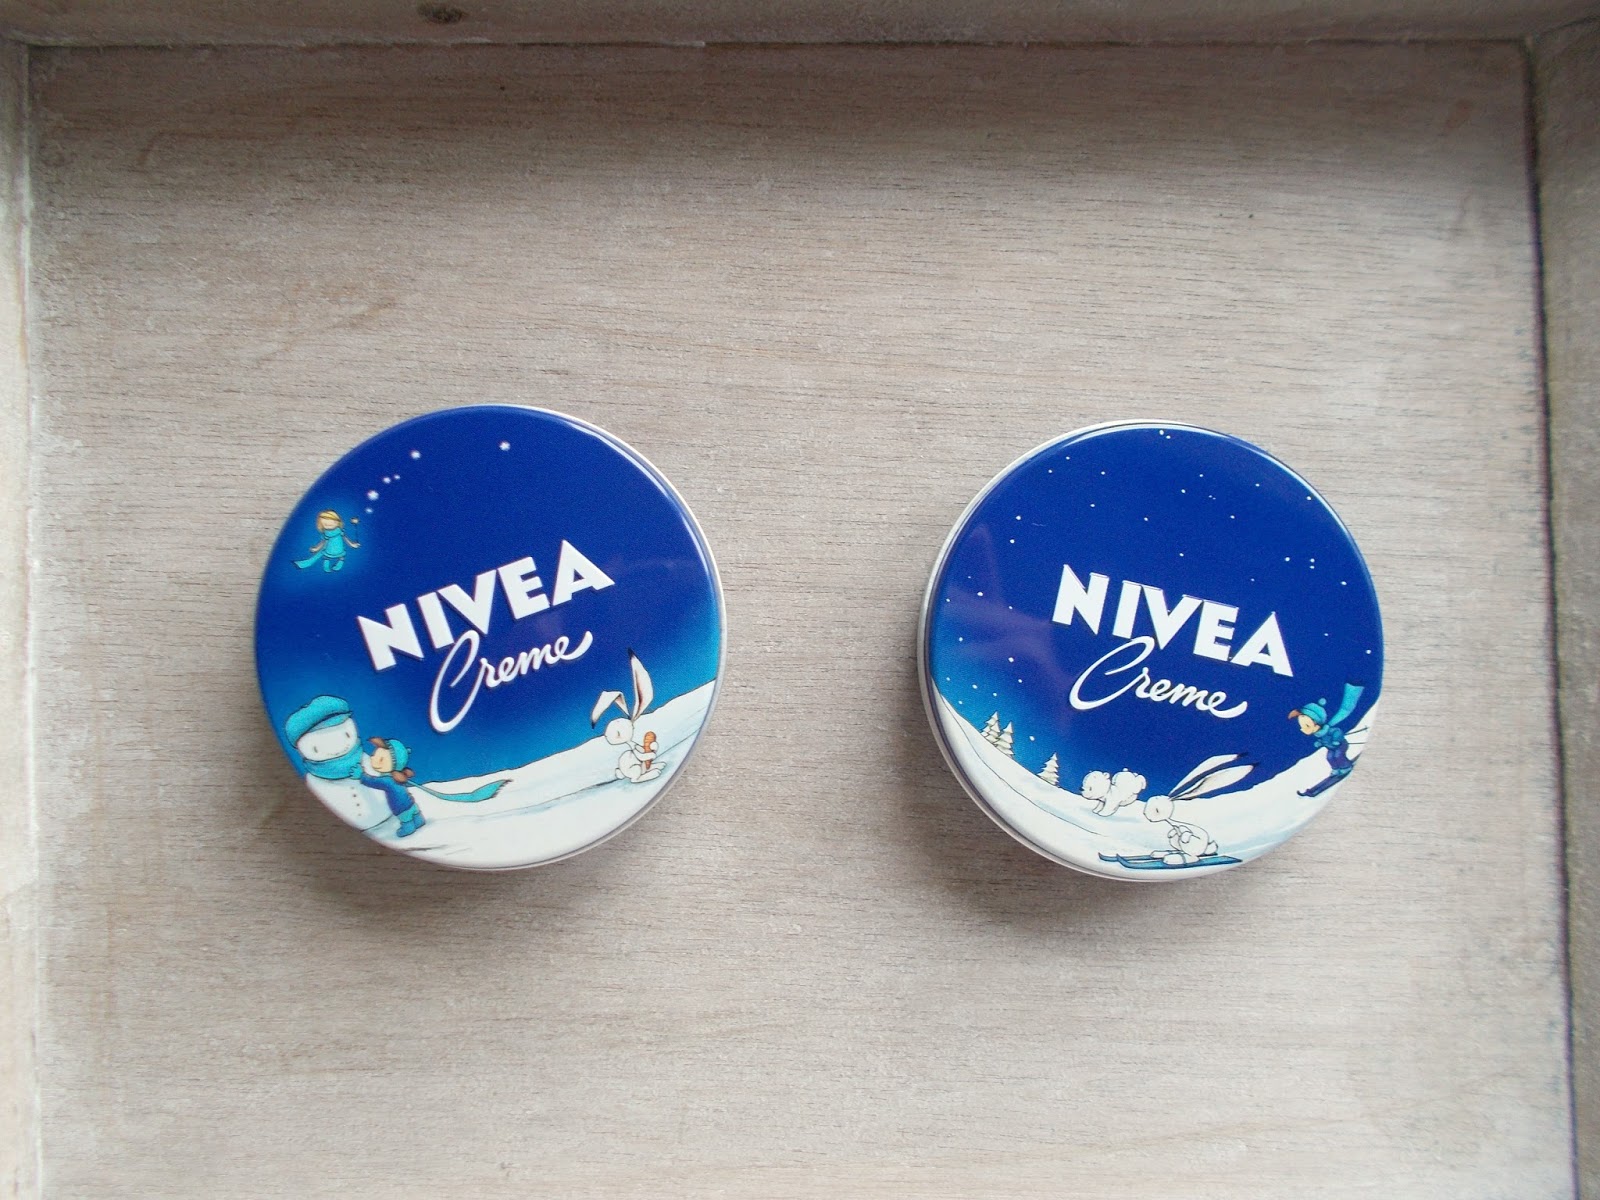 Nivea Creme 75ml limited edition tins